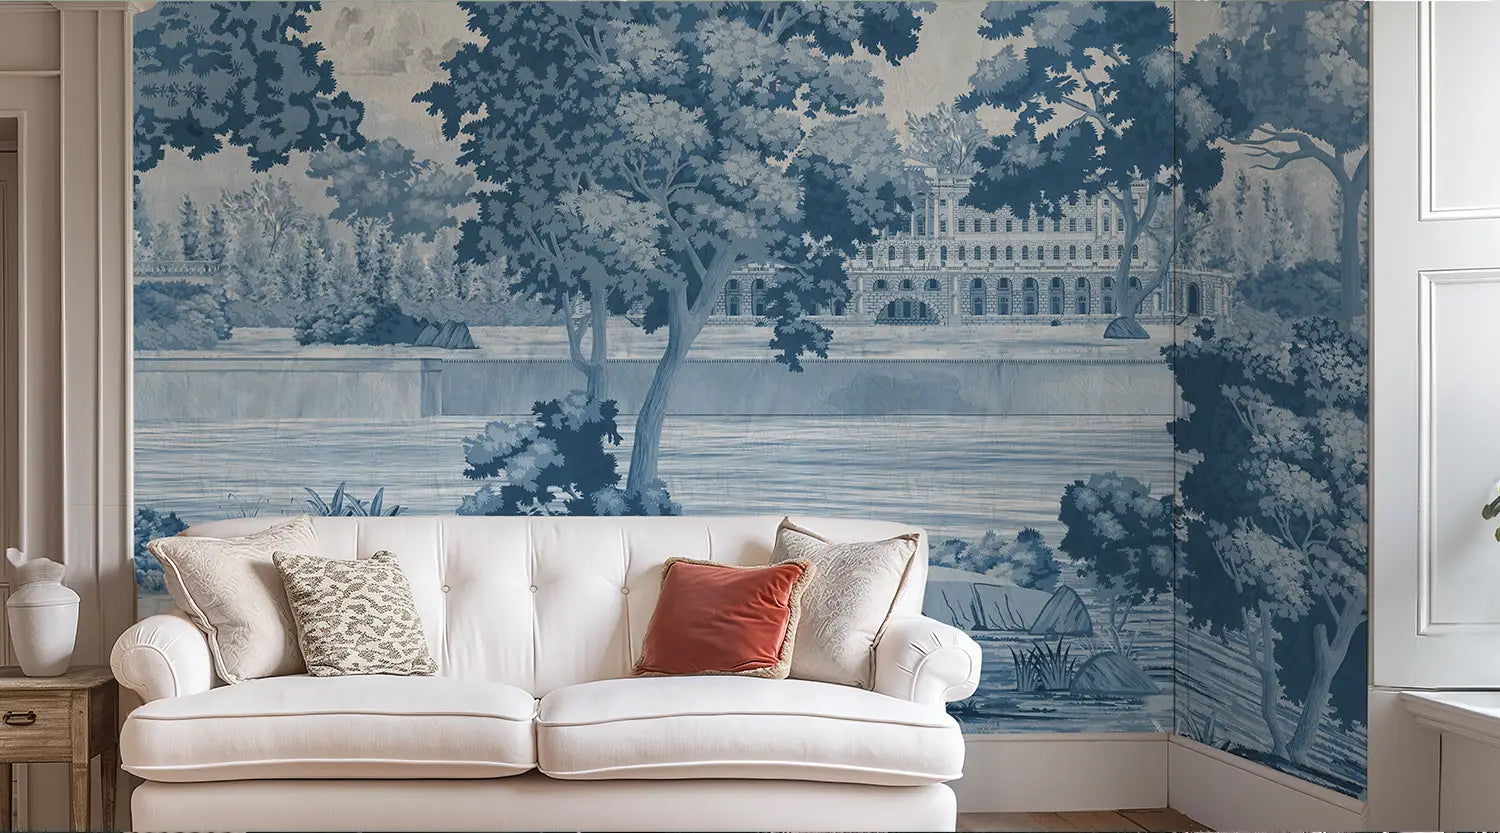 Living Room Wallpaper